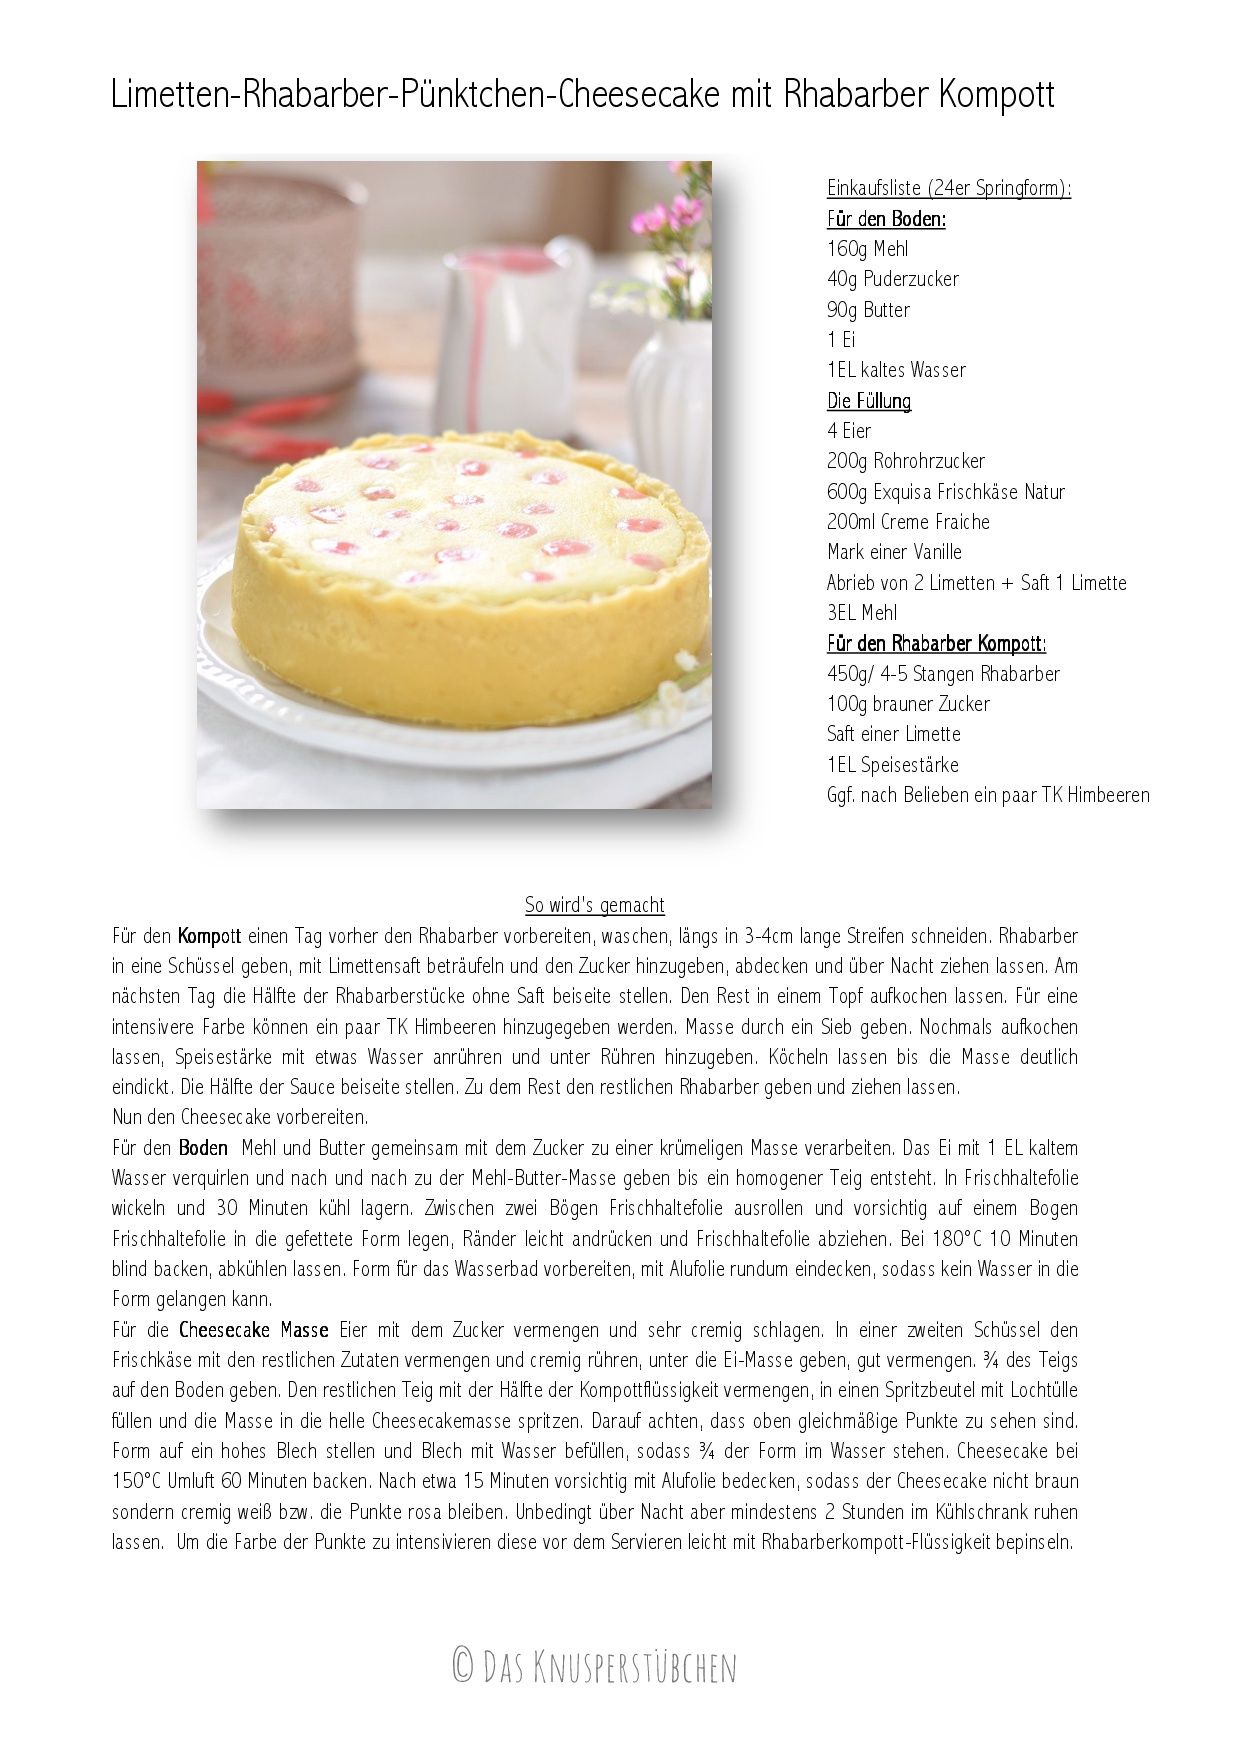 Limetten Cheesecake mit Rhabarber Kompott 1